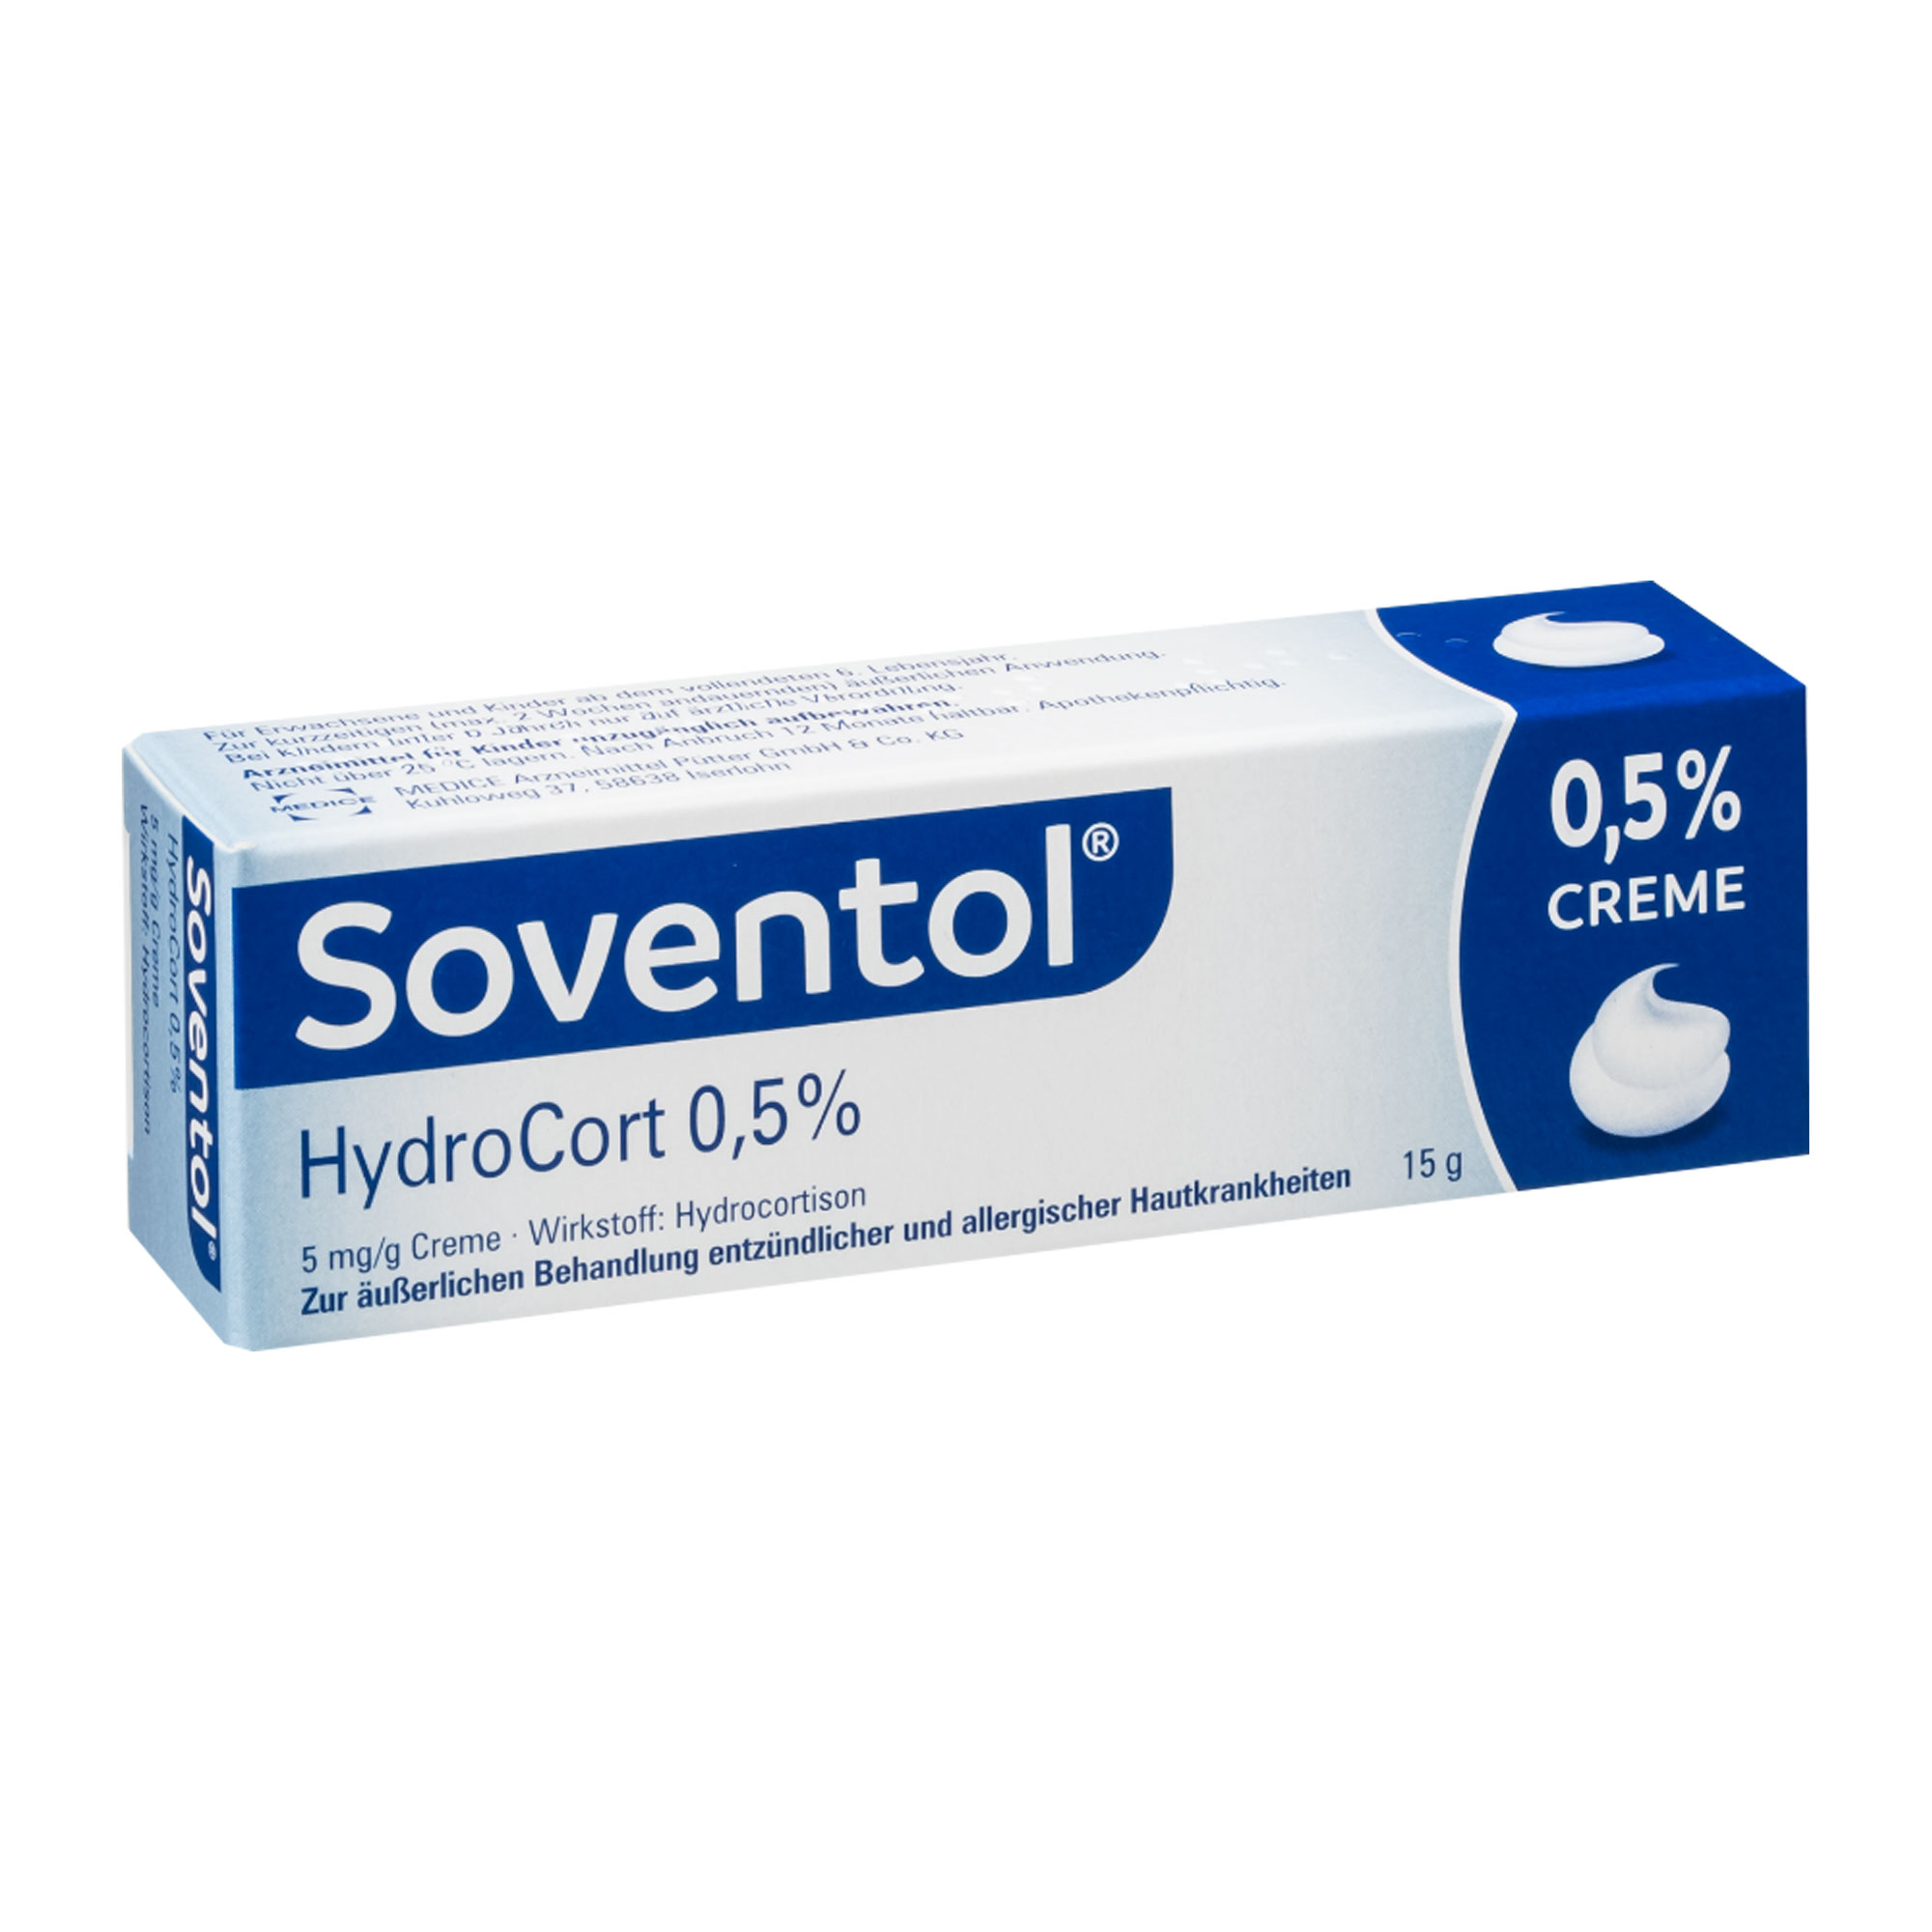 Soventol Hydrocort 0,5% Creme Umverpackung